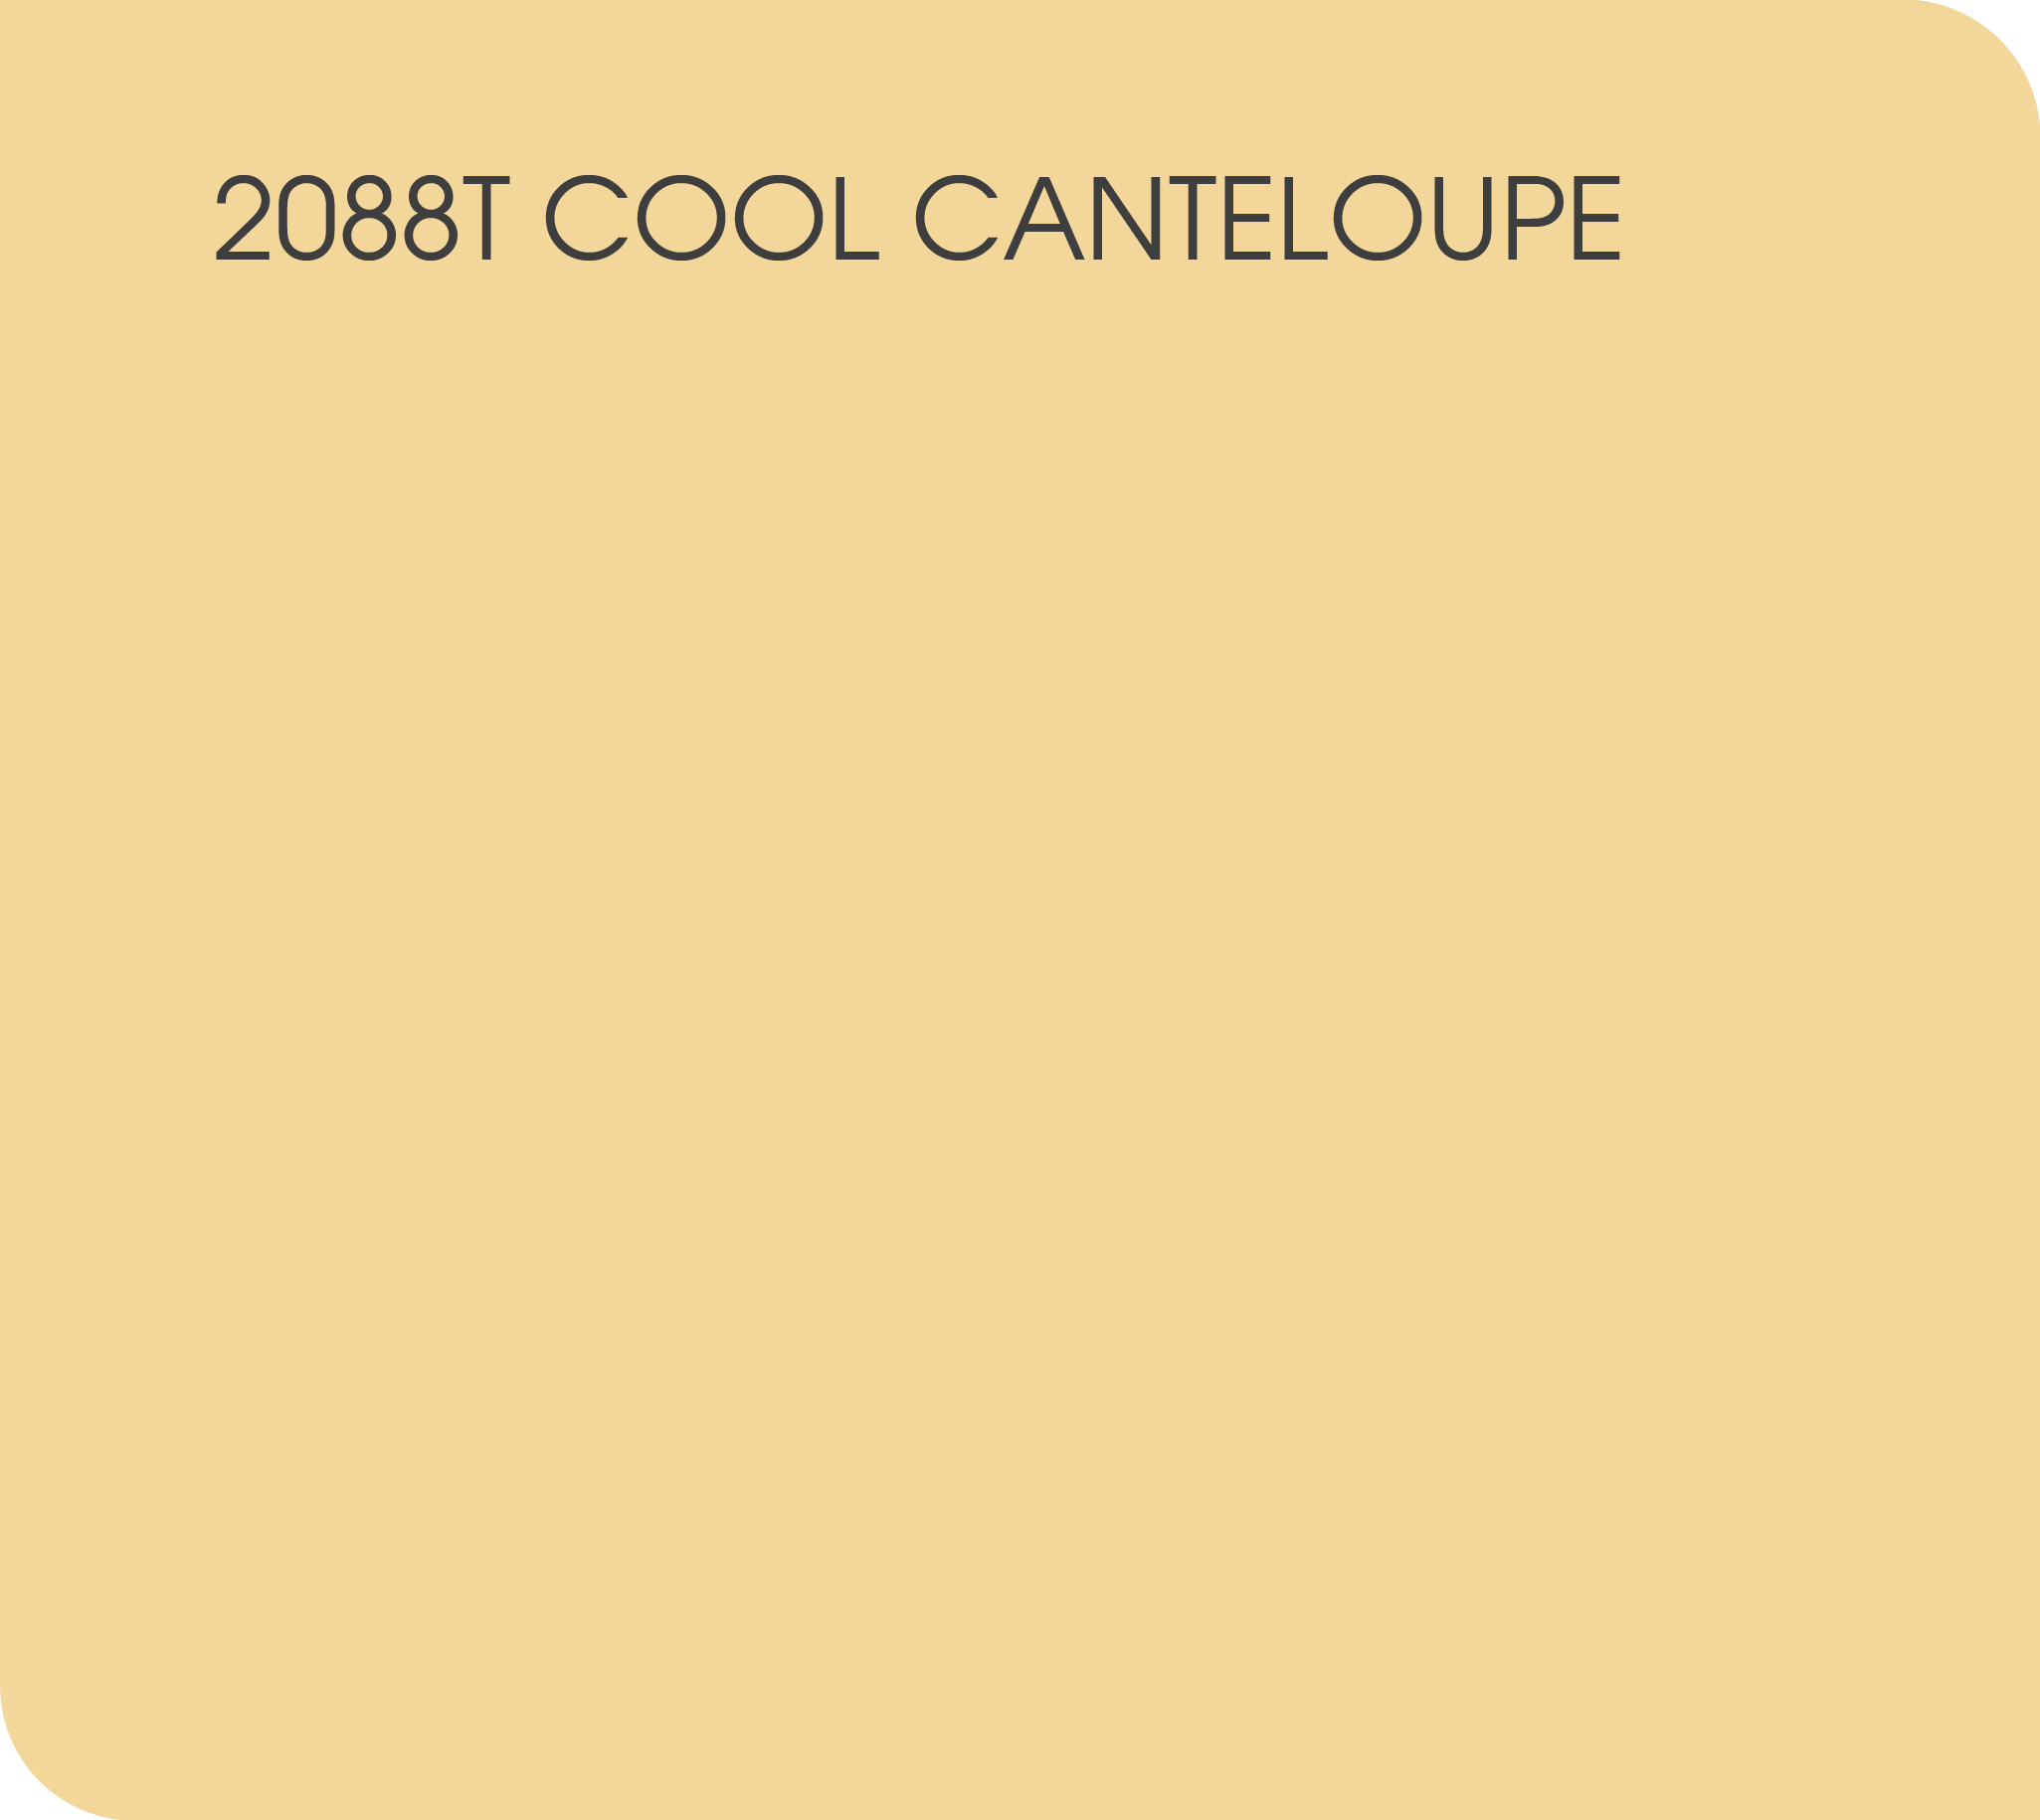 cool canteloupe